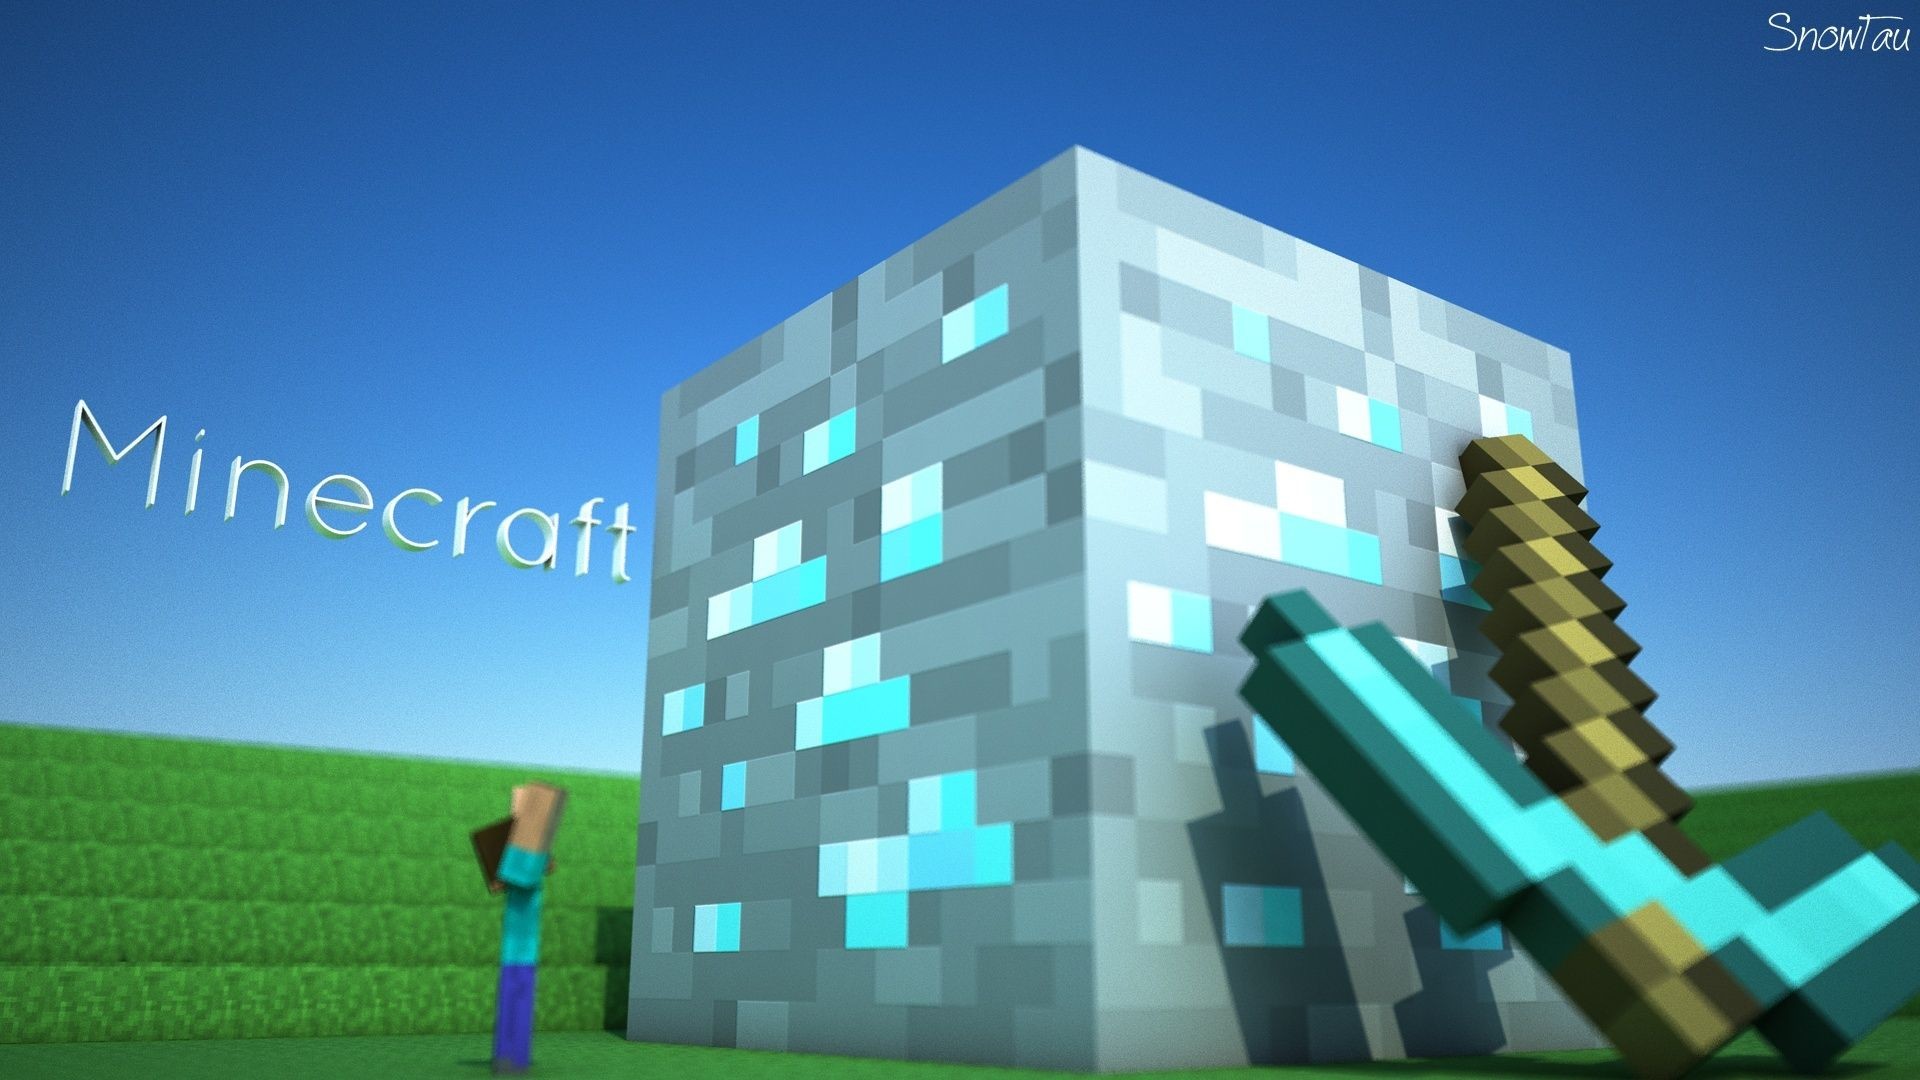 1920x1080 SnowTau's Minecraft Backgrounds! - Fan Art - Show Your Creation - Minecraft  Forum - Minecraft Forum